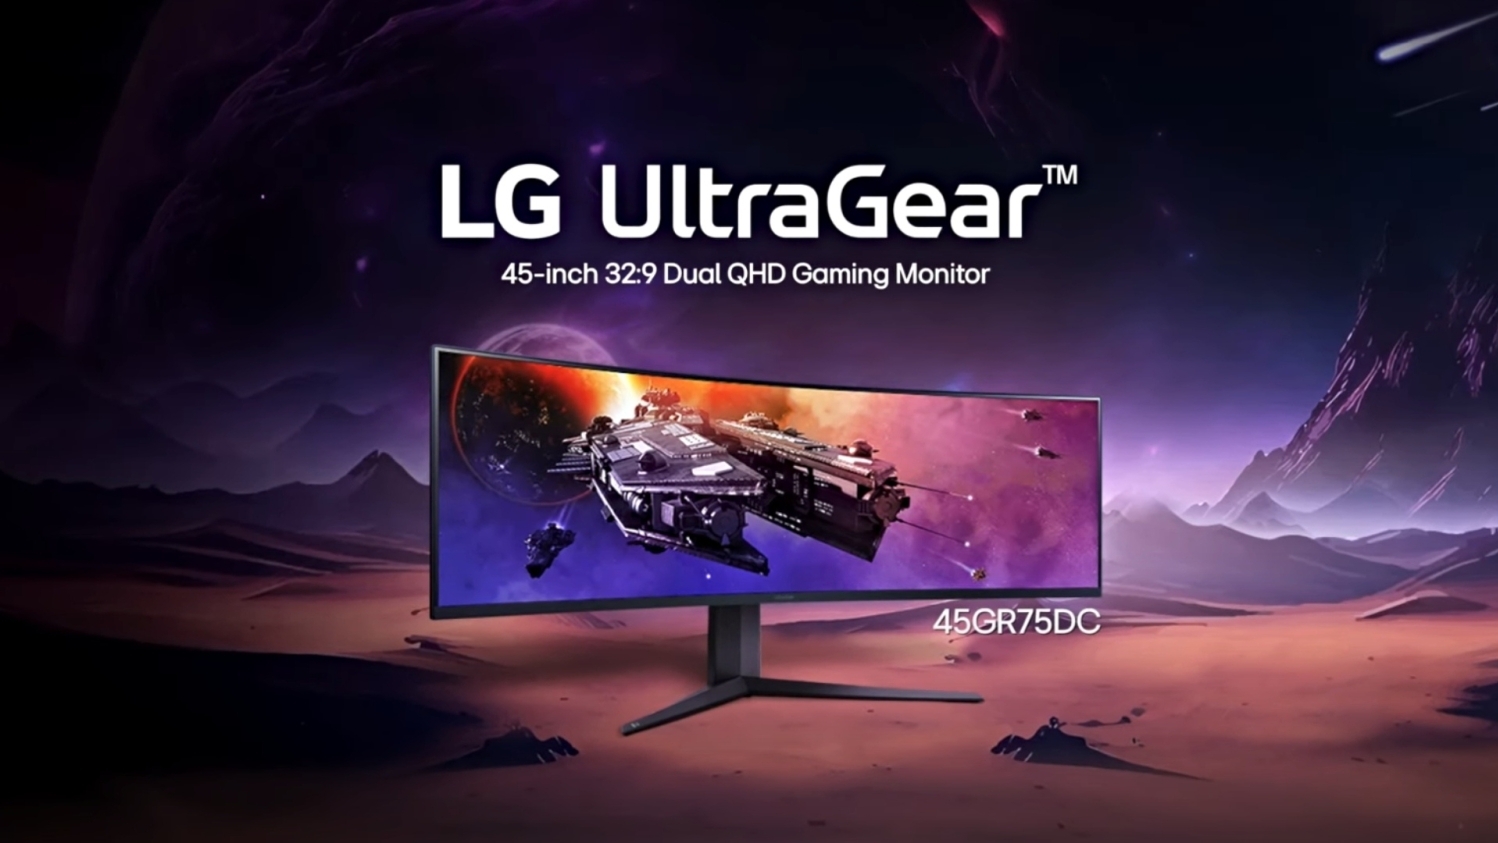 https://static.tweaktown.com/news/16x9/94261_new-lg-ultragear-gaming-display-slaps-two-1440p-displays-together-into-45-inch-ultrawide.jpg